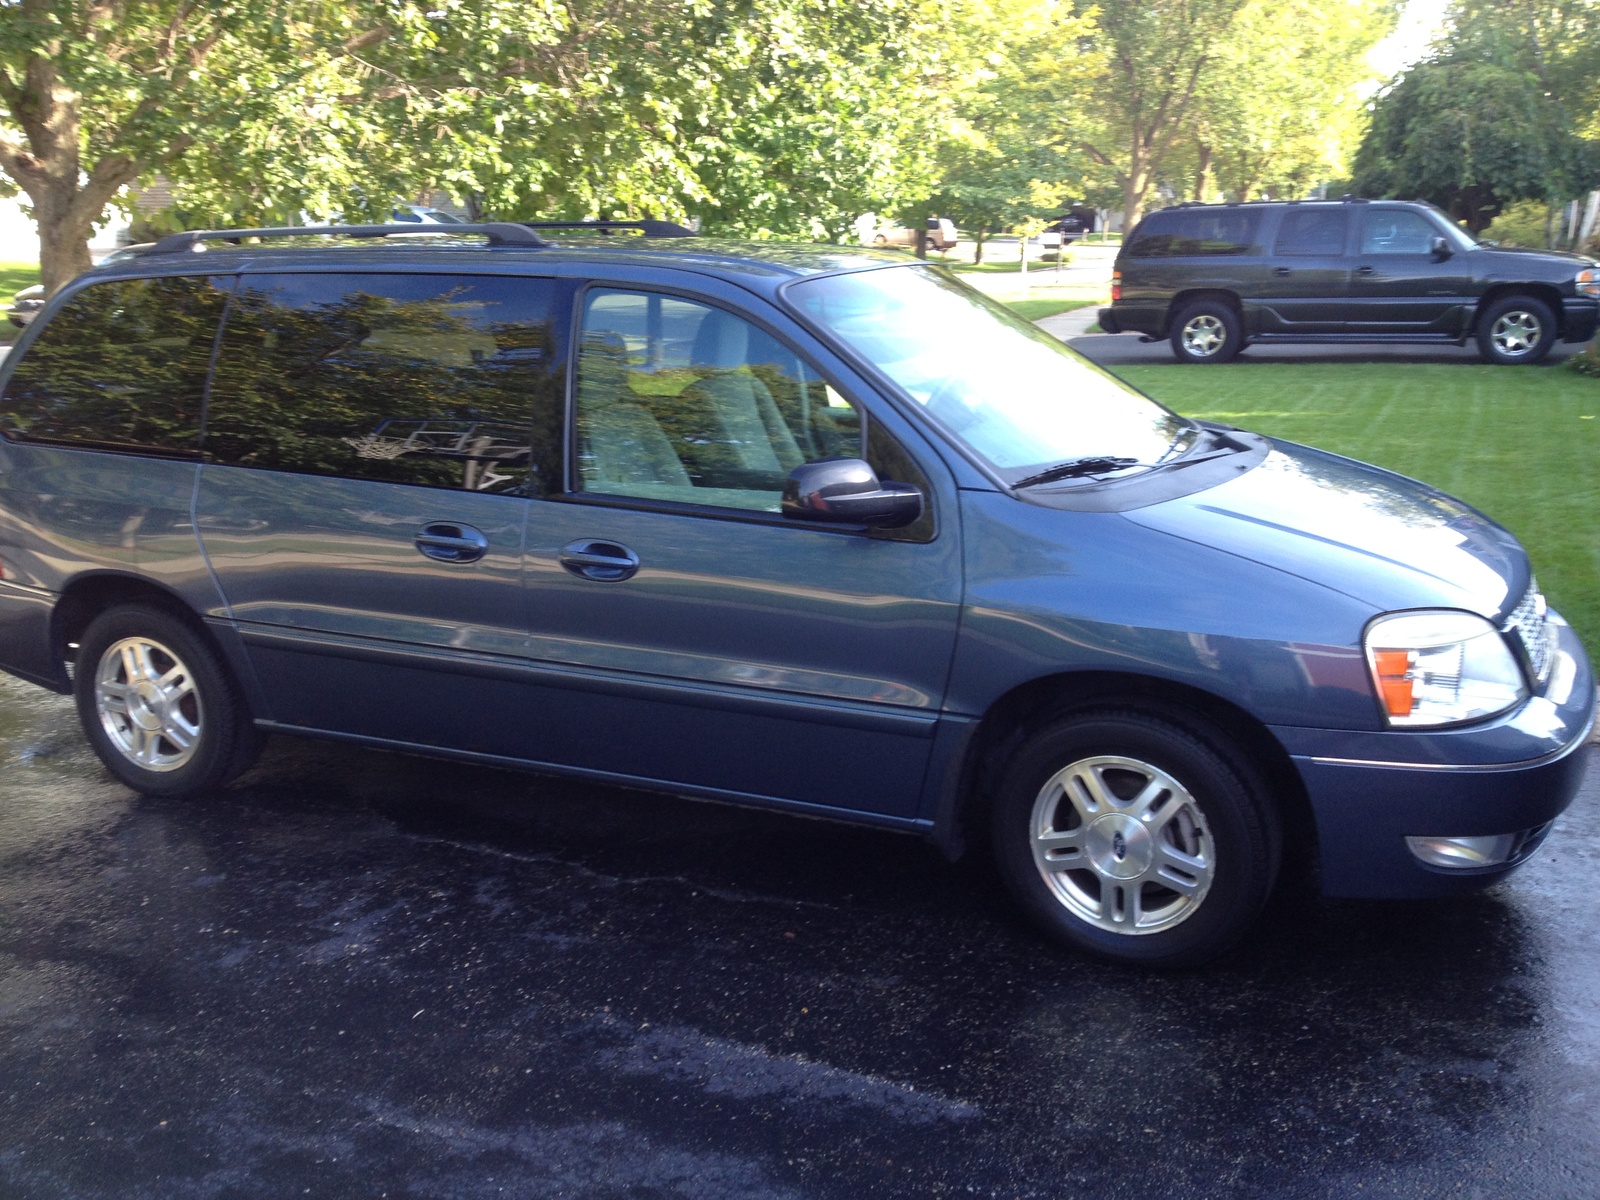 2006 Ford freestar minivan review #6